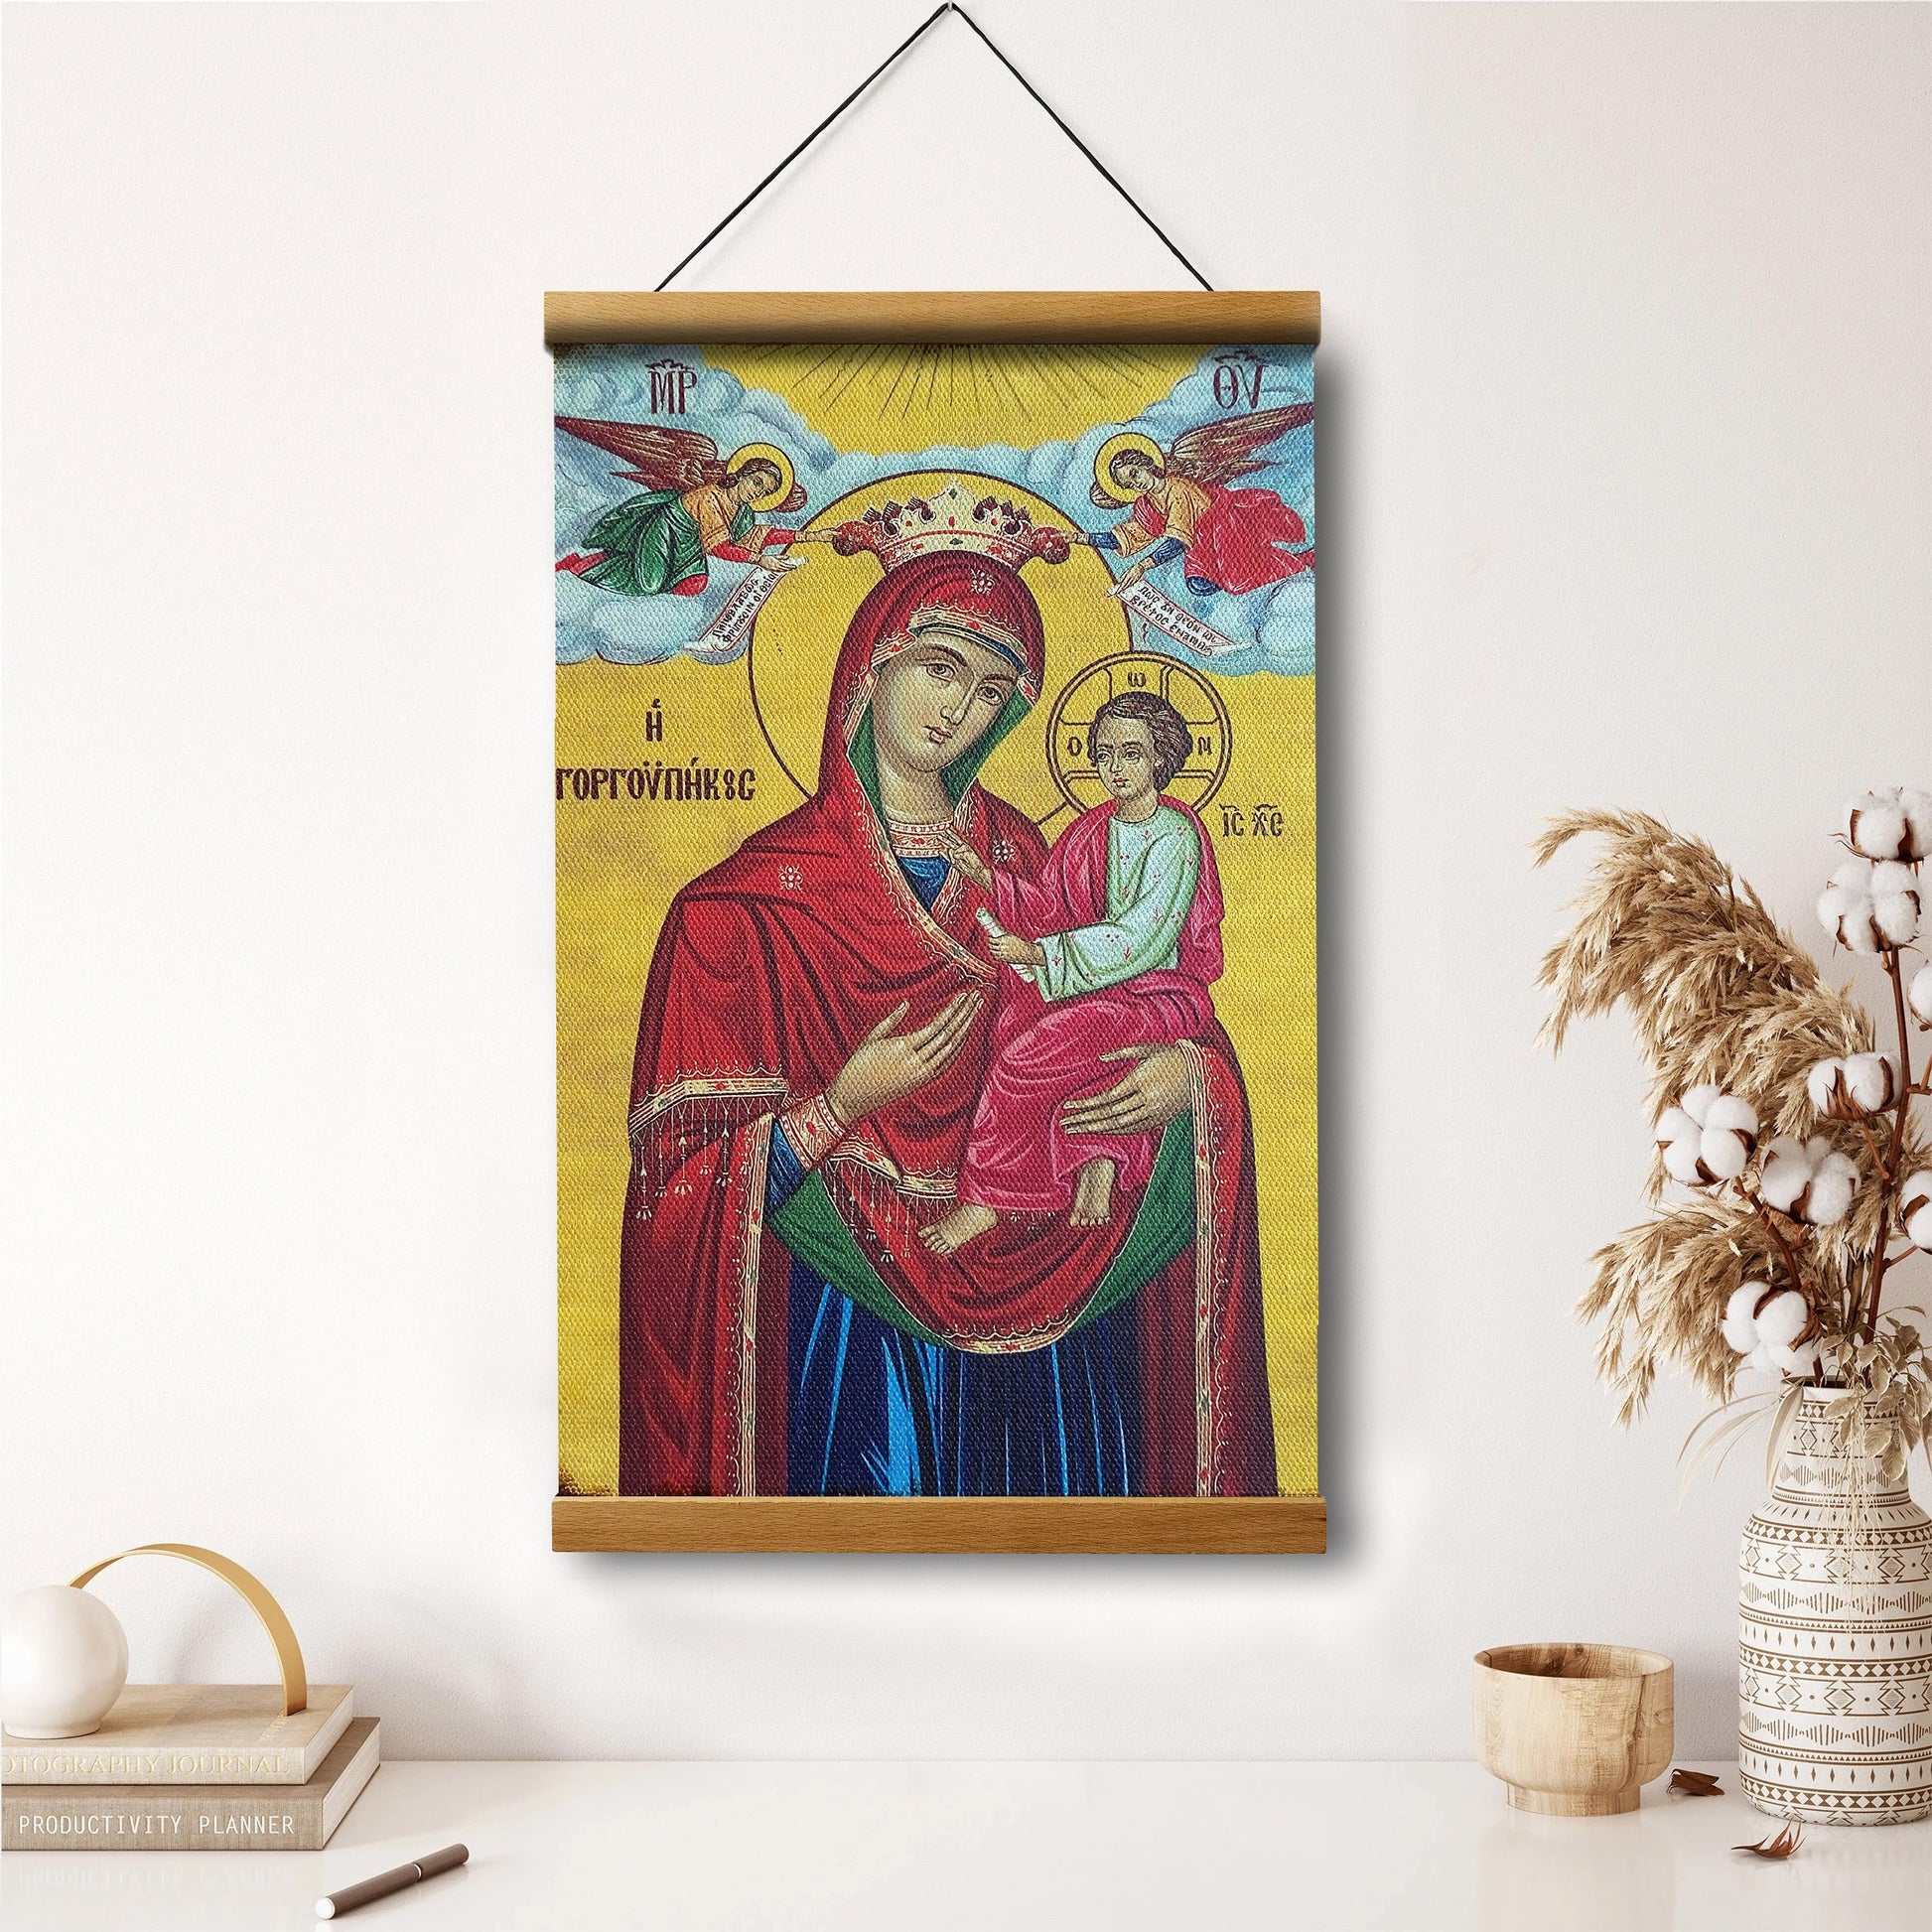 Virgin Mary And Jesus Virgin Mary Hanging Canvas Wall Art - Catholic Hanging Canvas Wall Art - Religious Gift - Christian Wall Art Decor